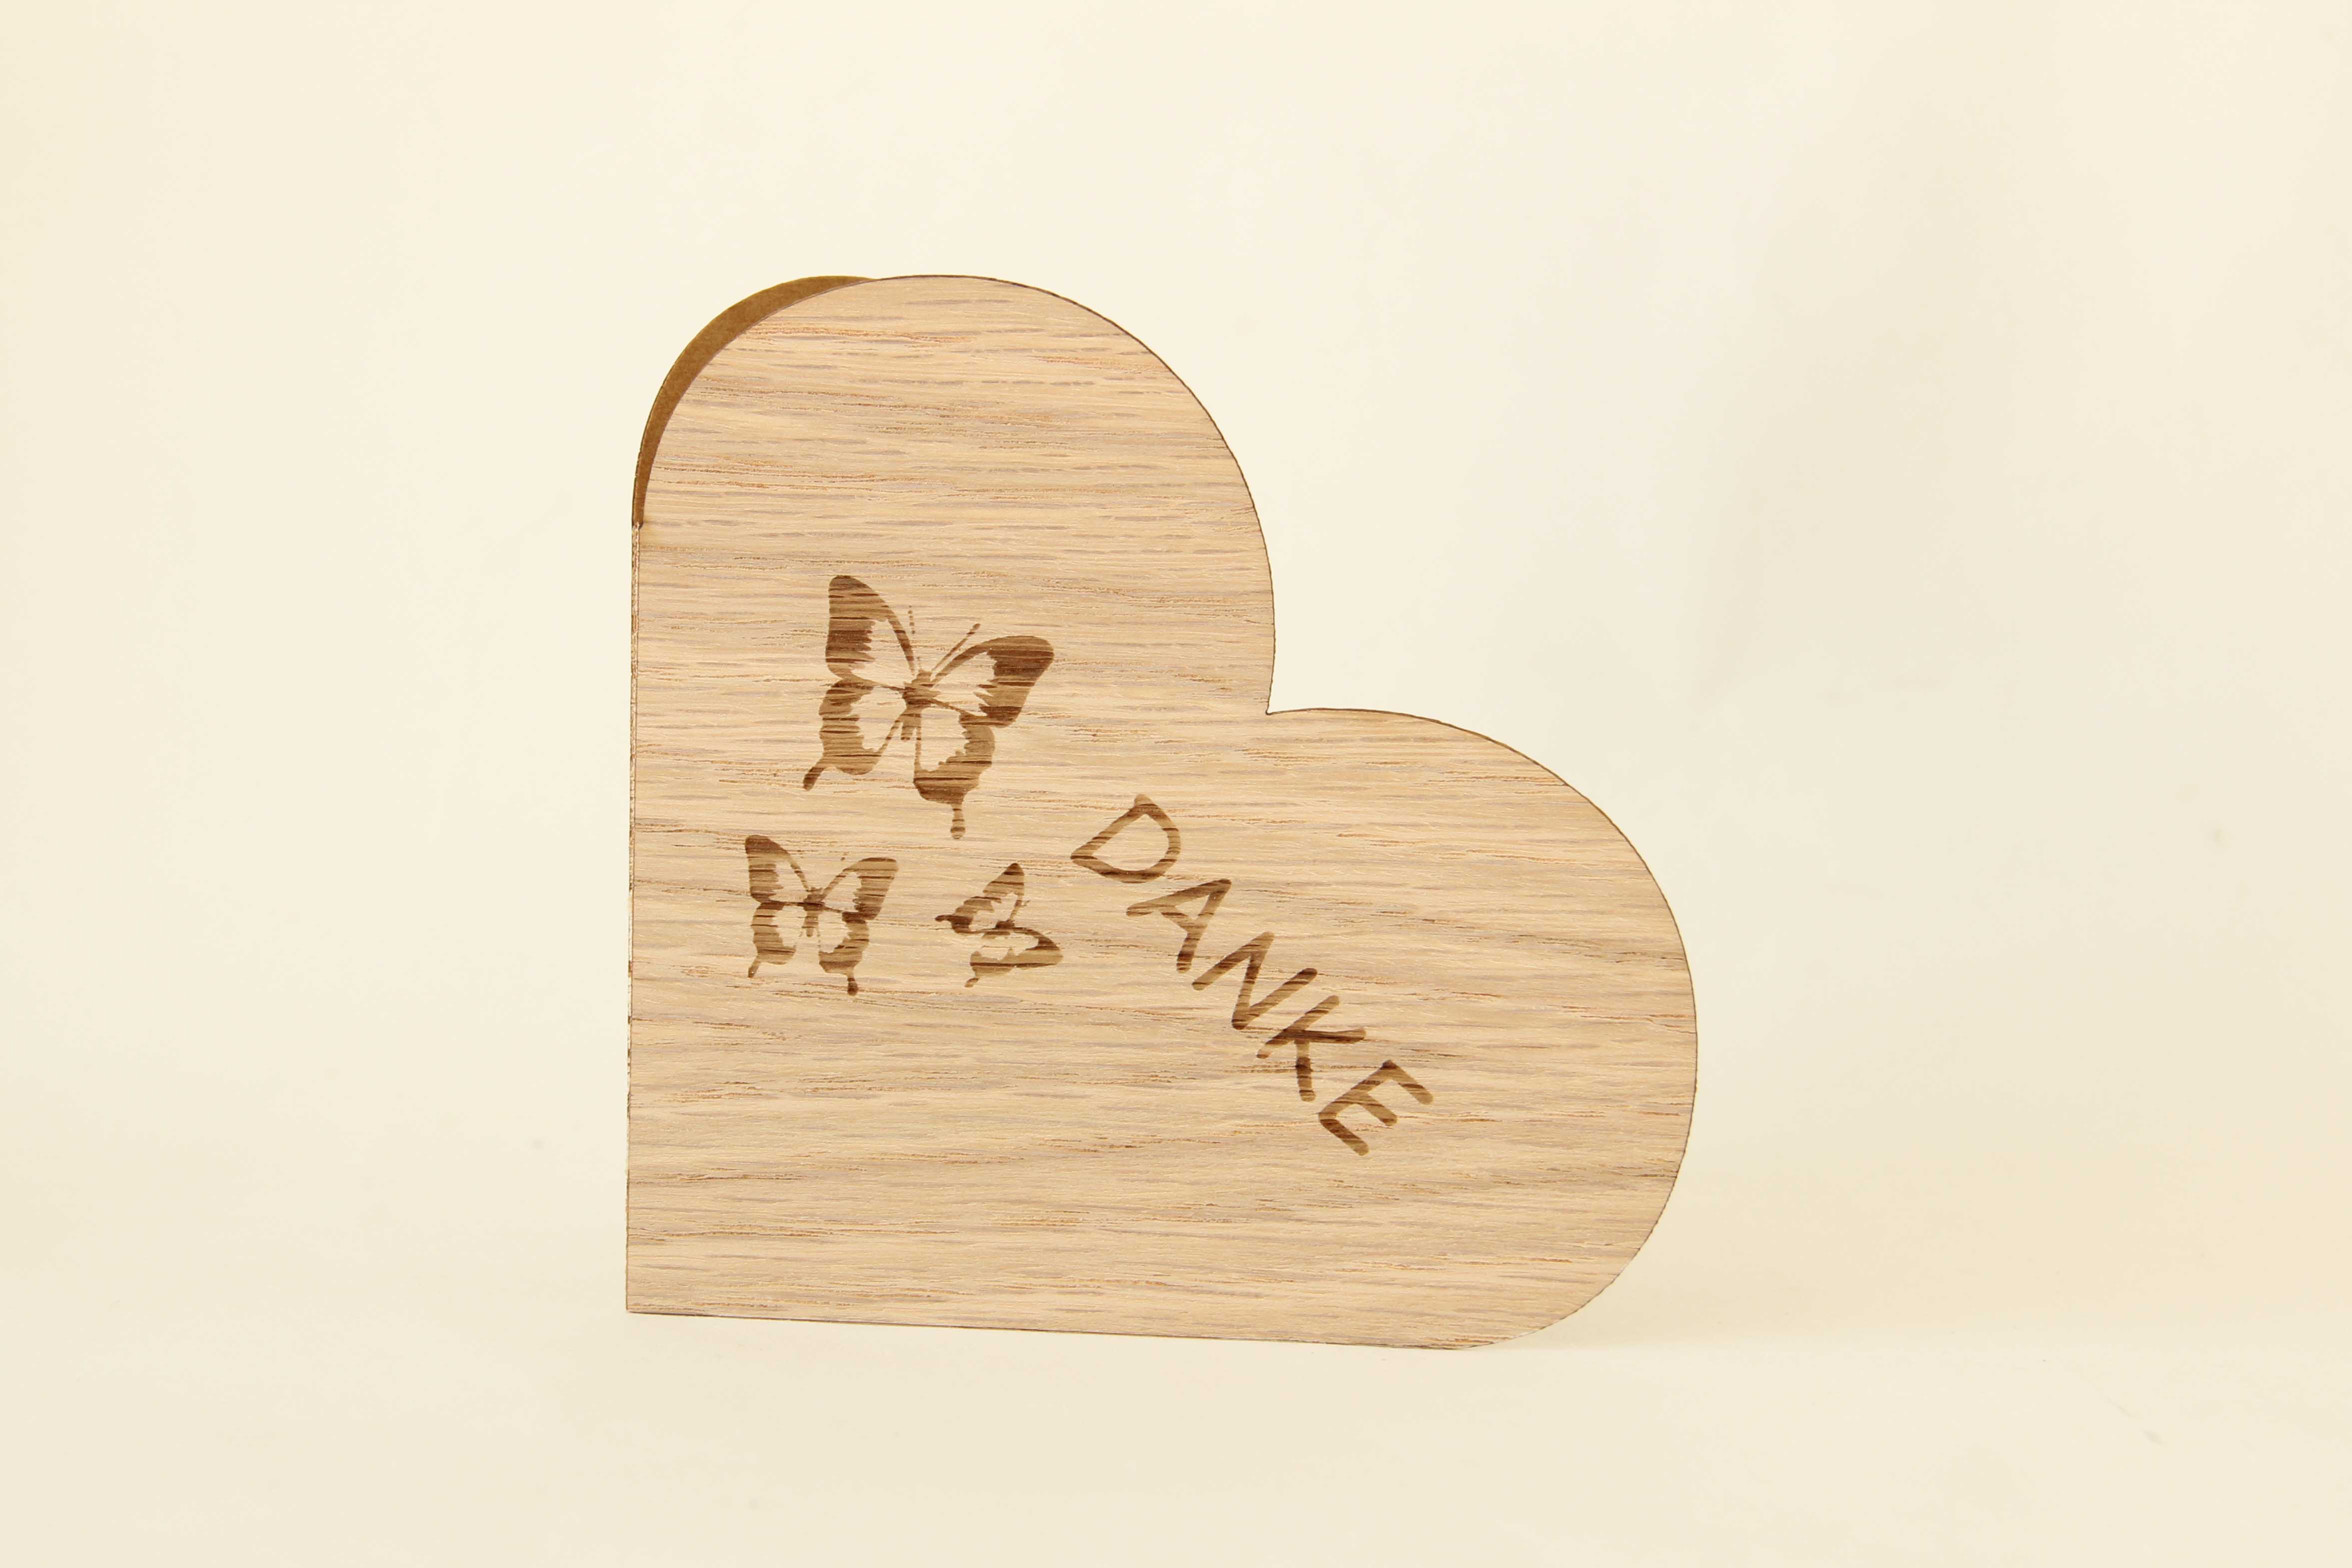 Holzgrusskarten - Herzkarte "DANKE" aus Eiche, Schmetterlinge, Dankeskarte, Geschenkkarte